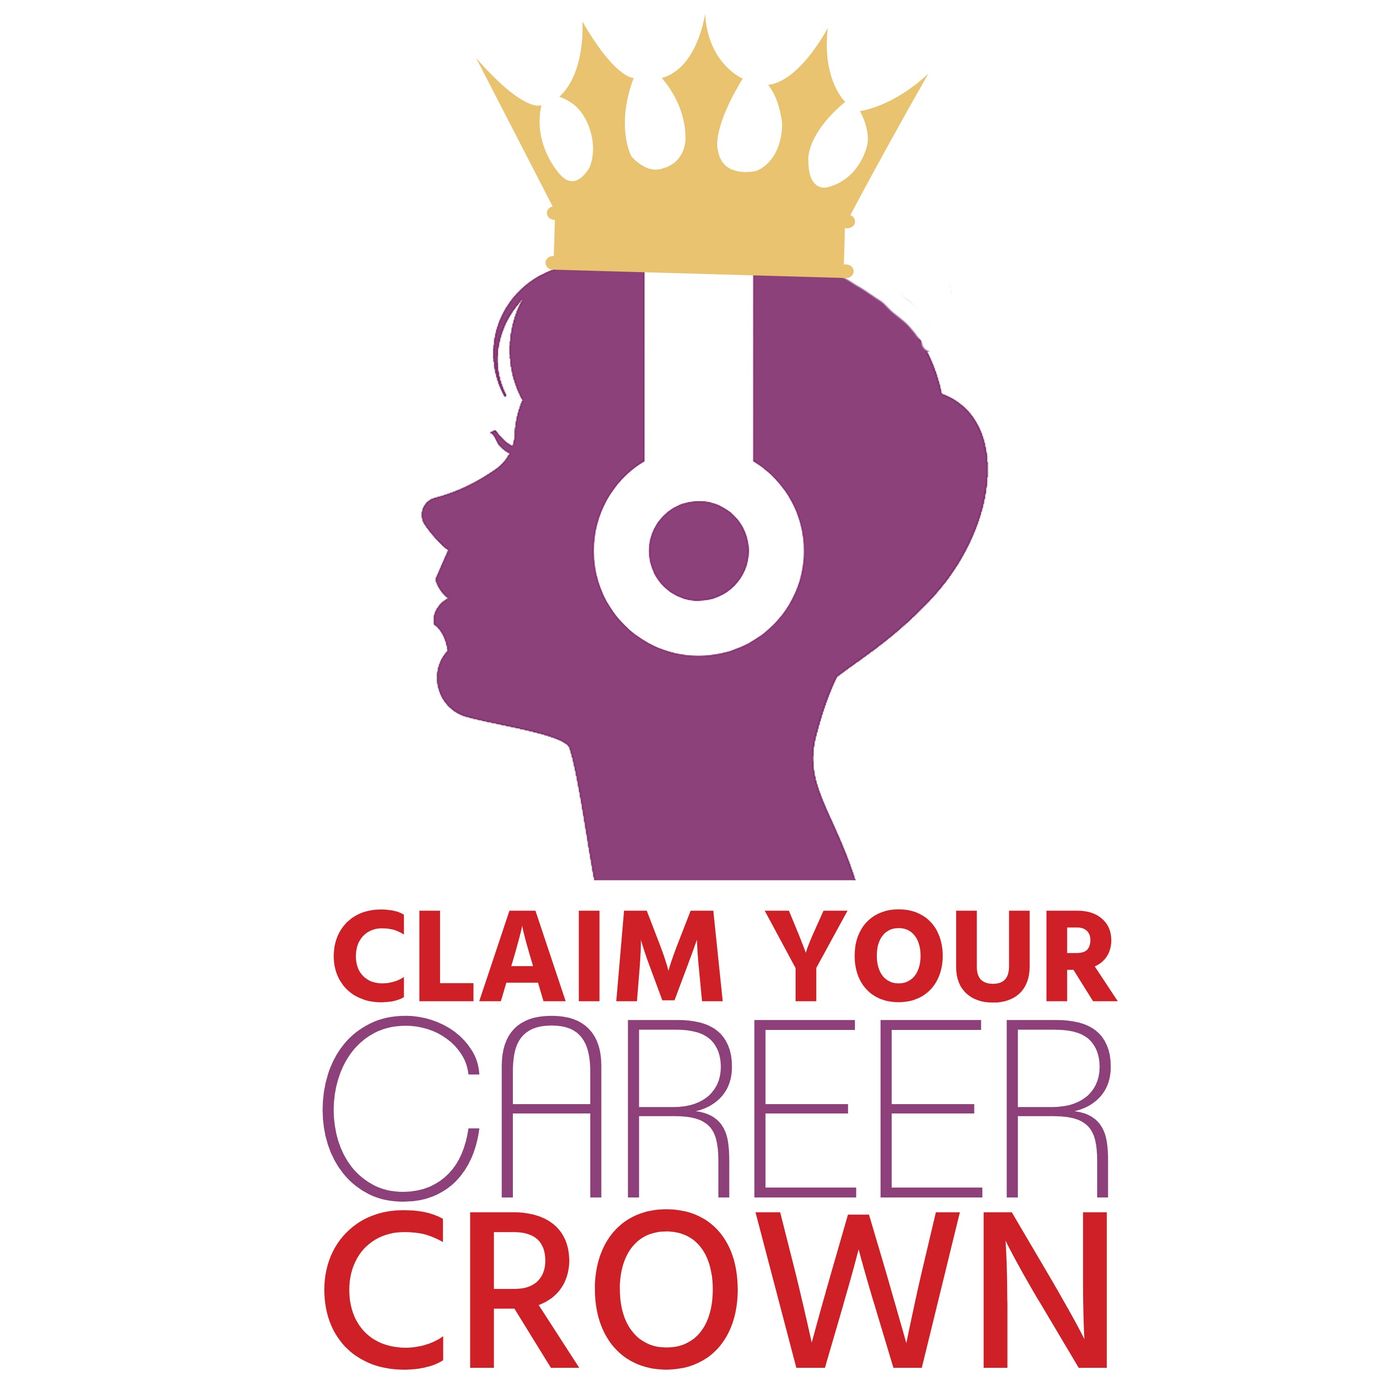 Claim Your Career Crown